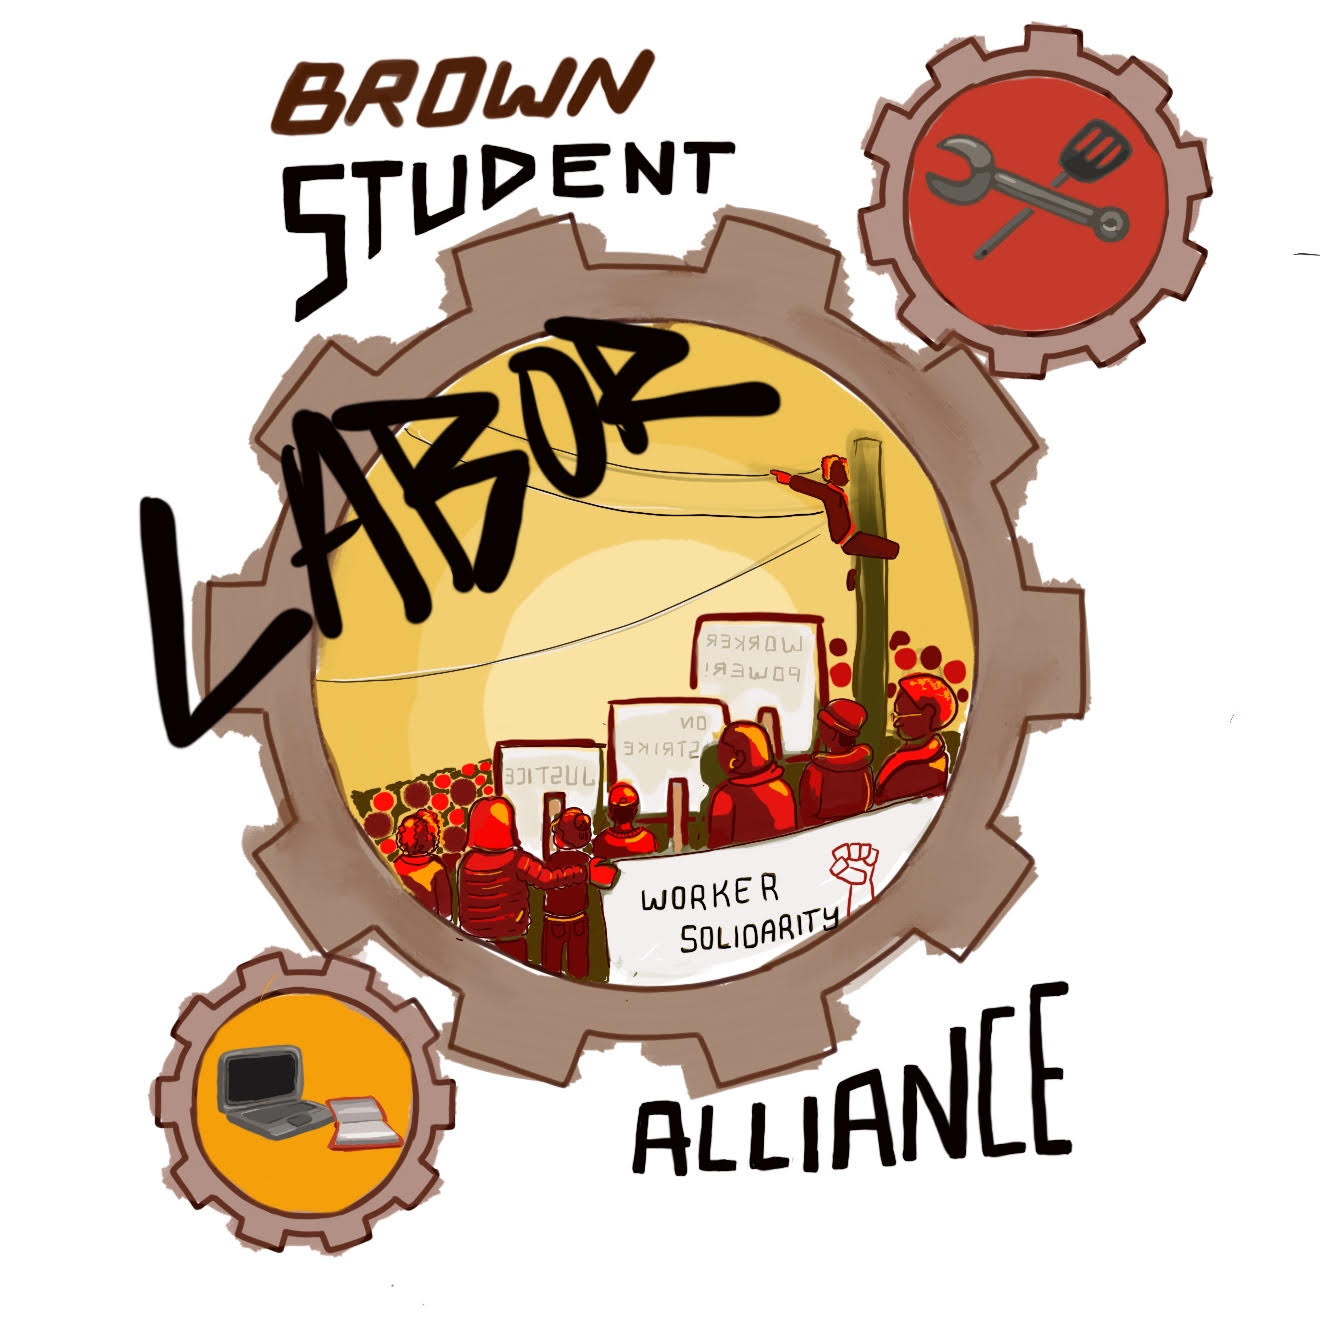 Brown Student Labor Alliance